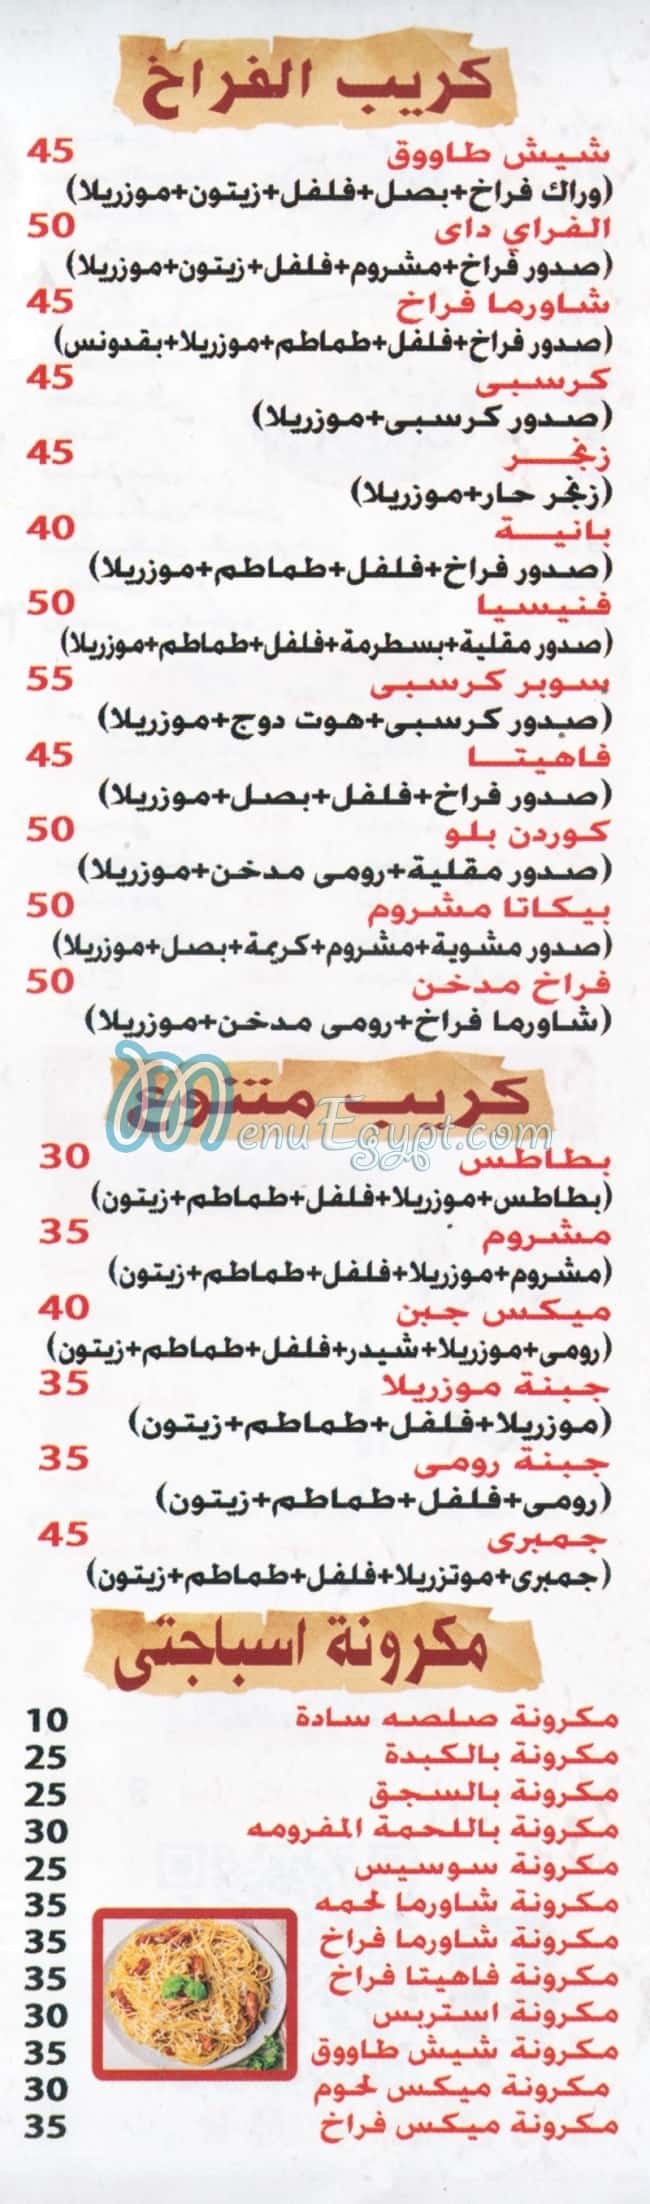 Awlad Ali menu Egypt 3